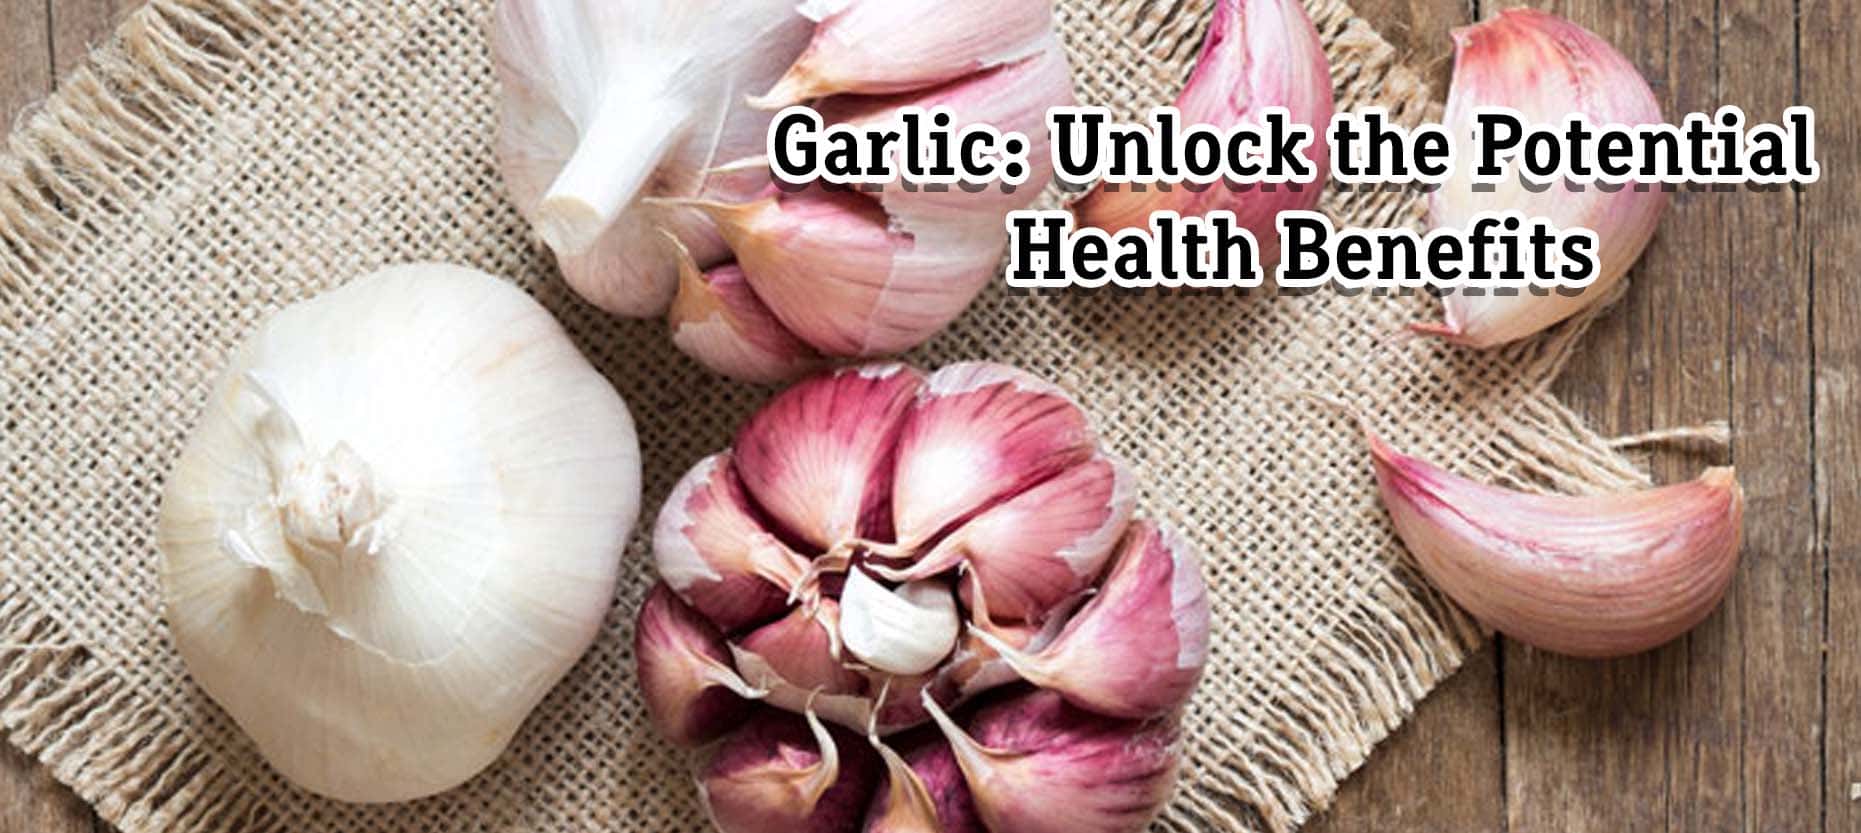 Garlic: Unlock the Potential Health Benefits